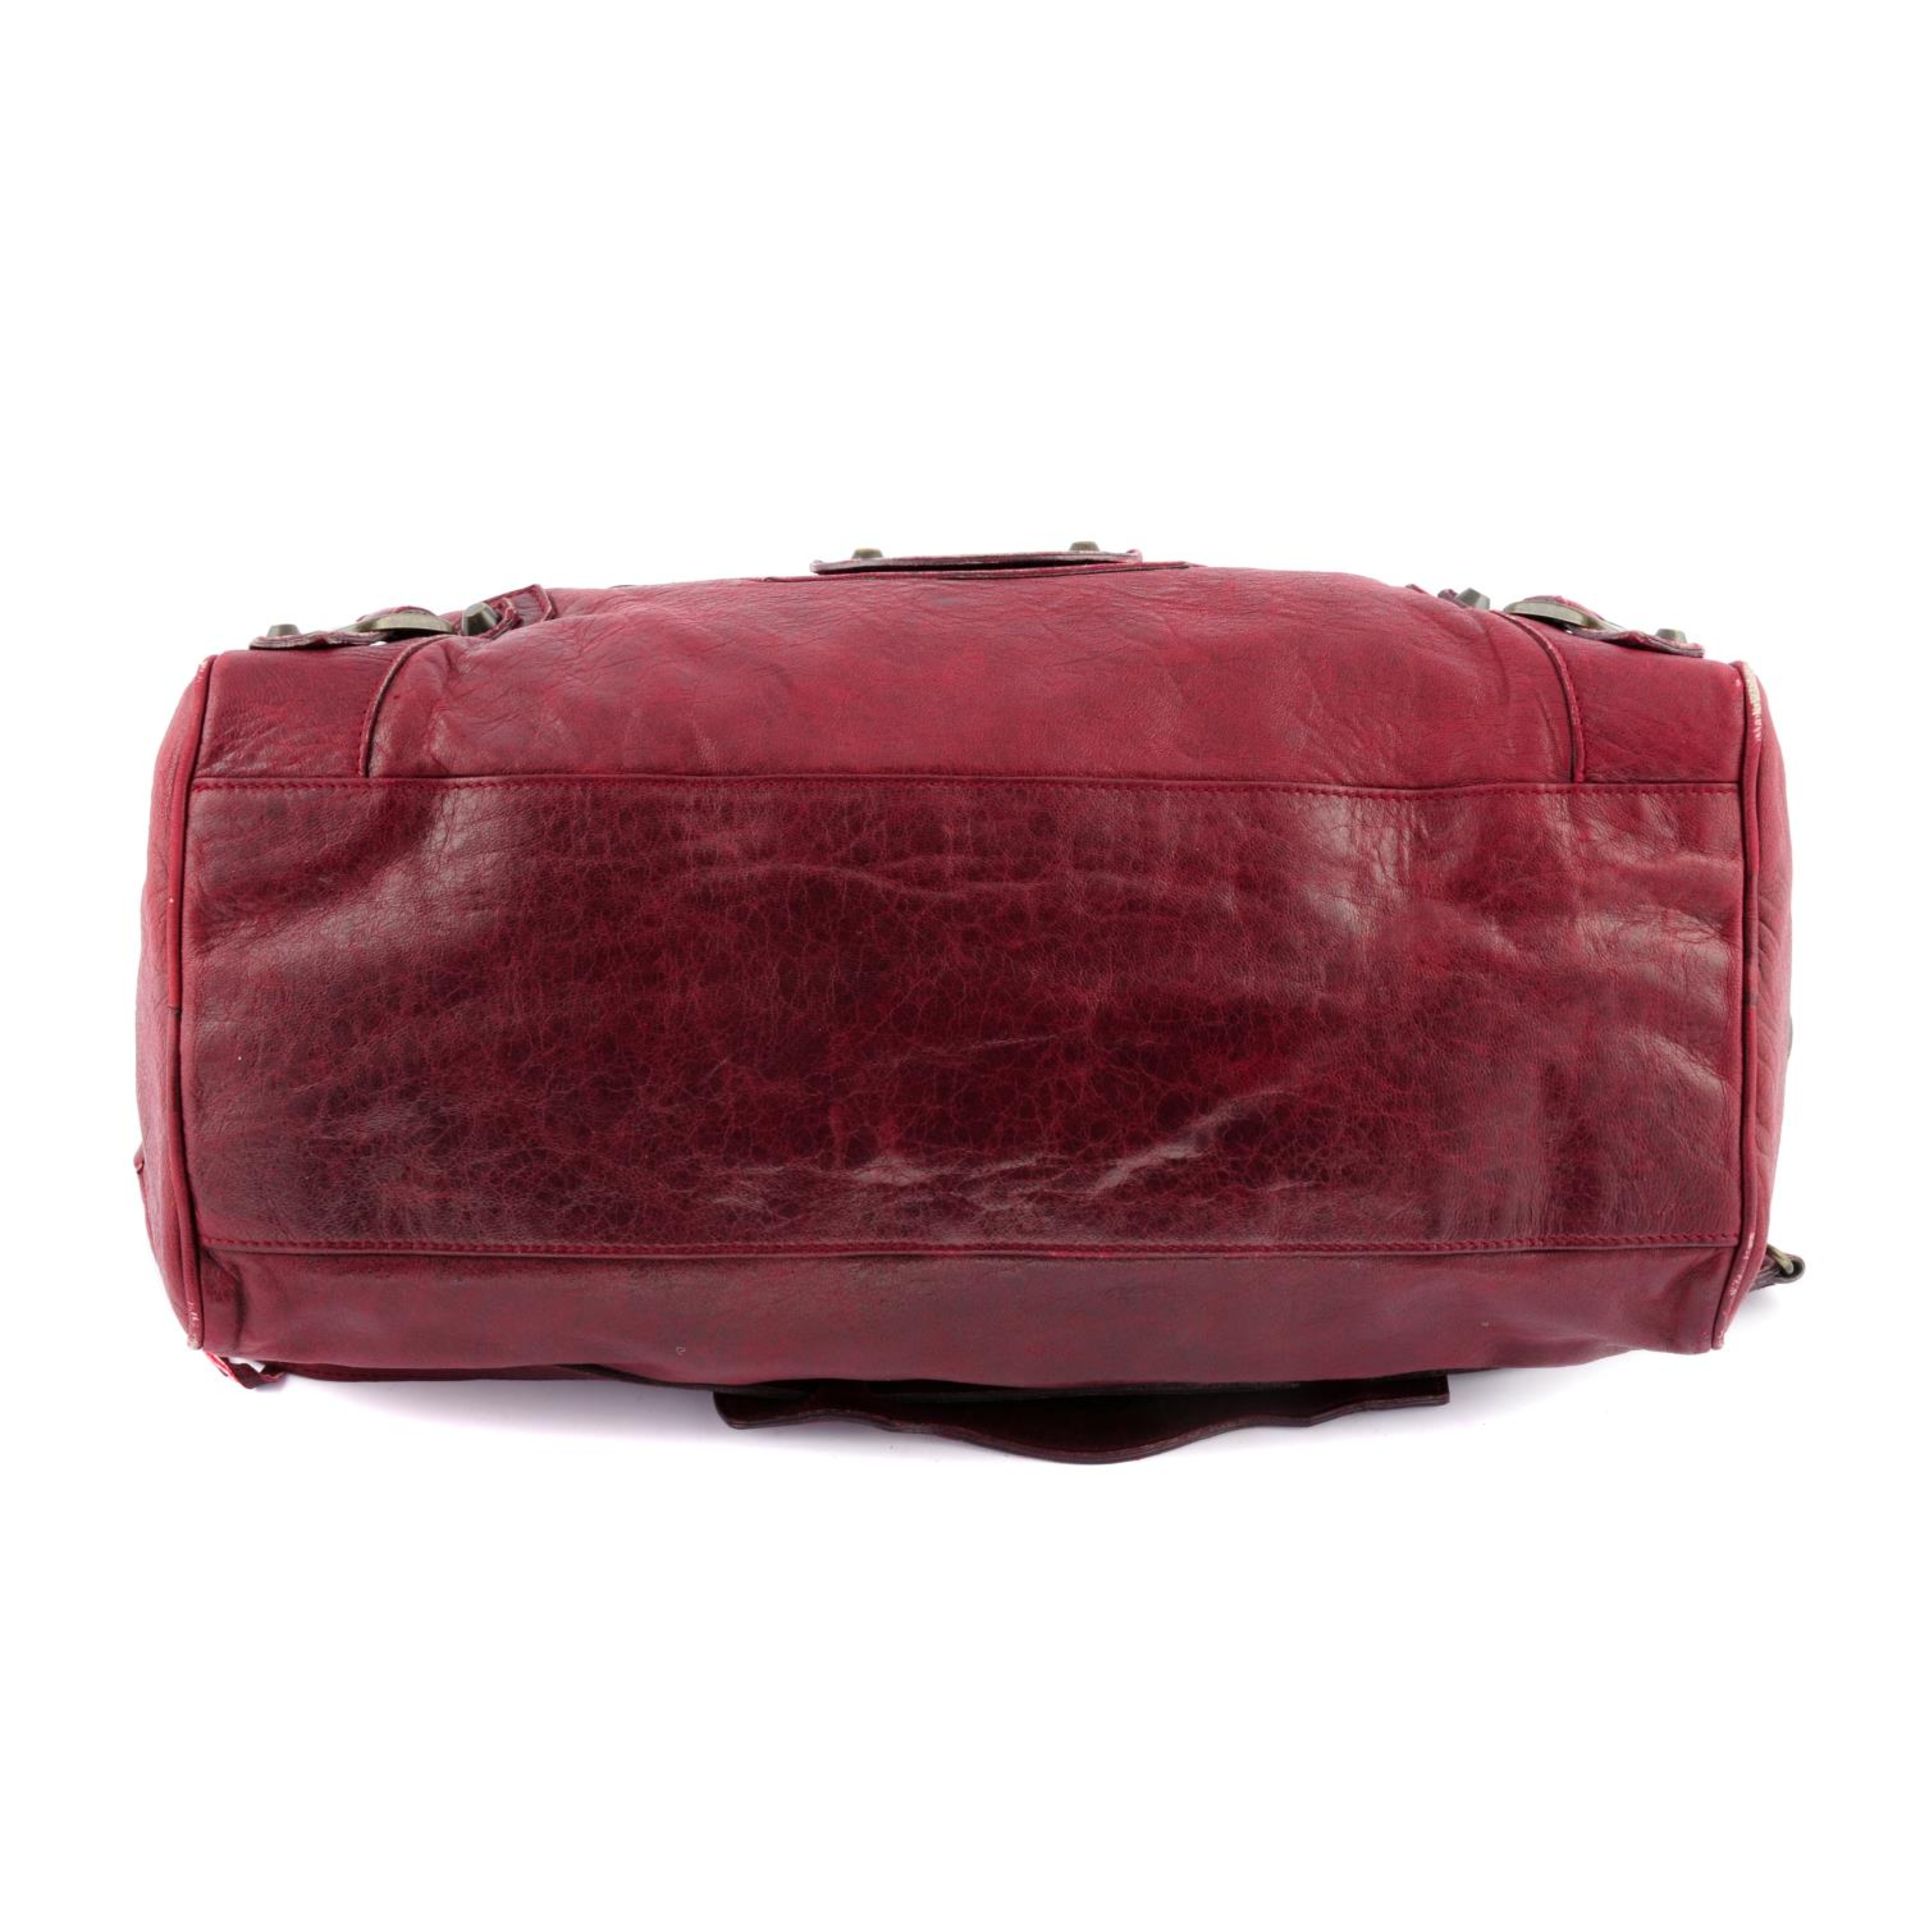 BALENCIAGA - a distressed leather Twiggy handbag. - Image 5 of 5